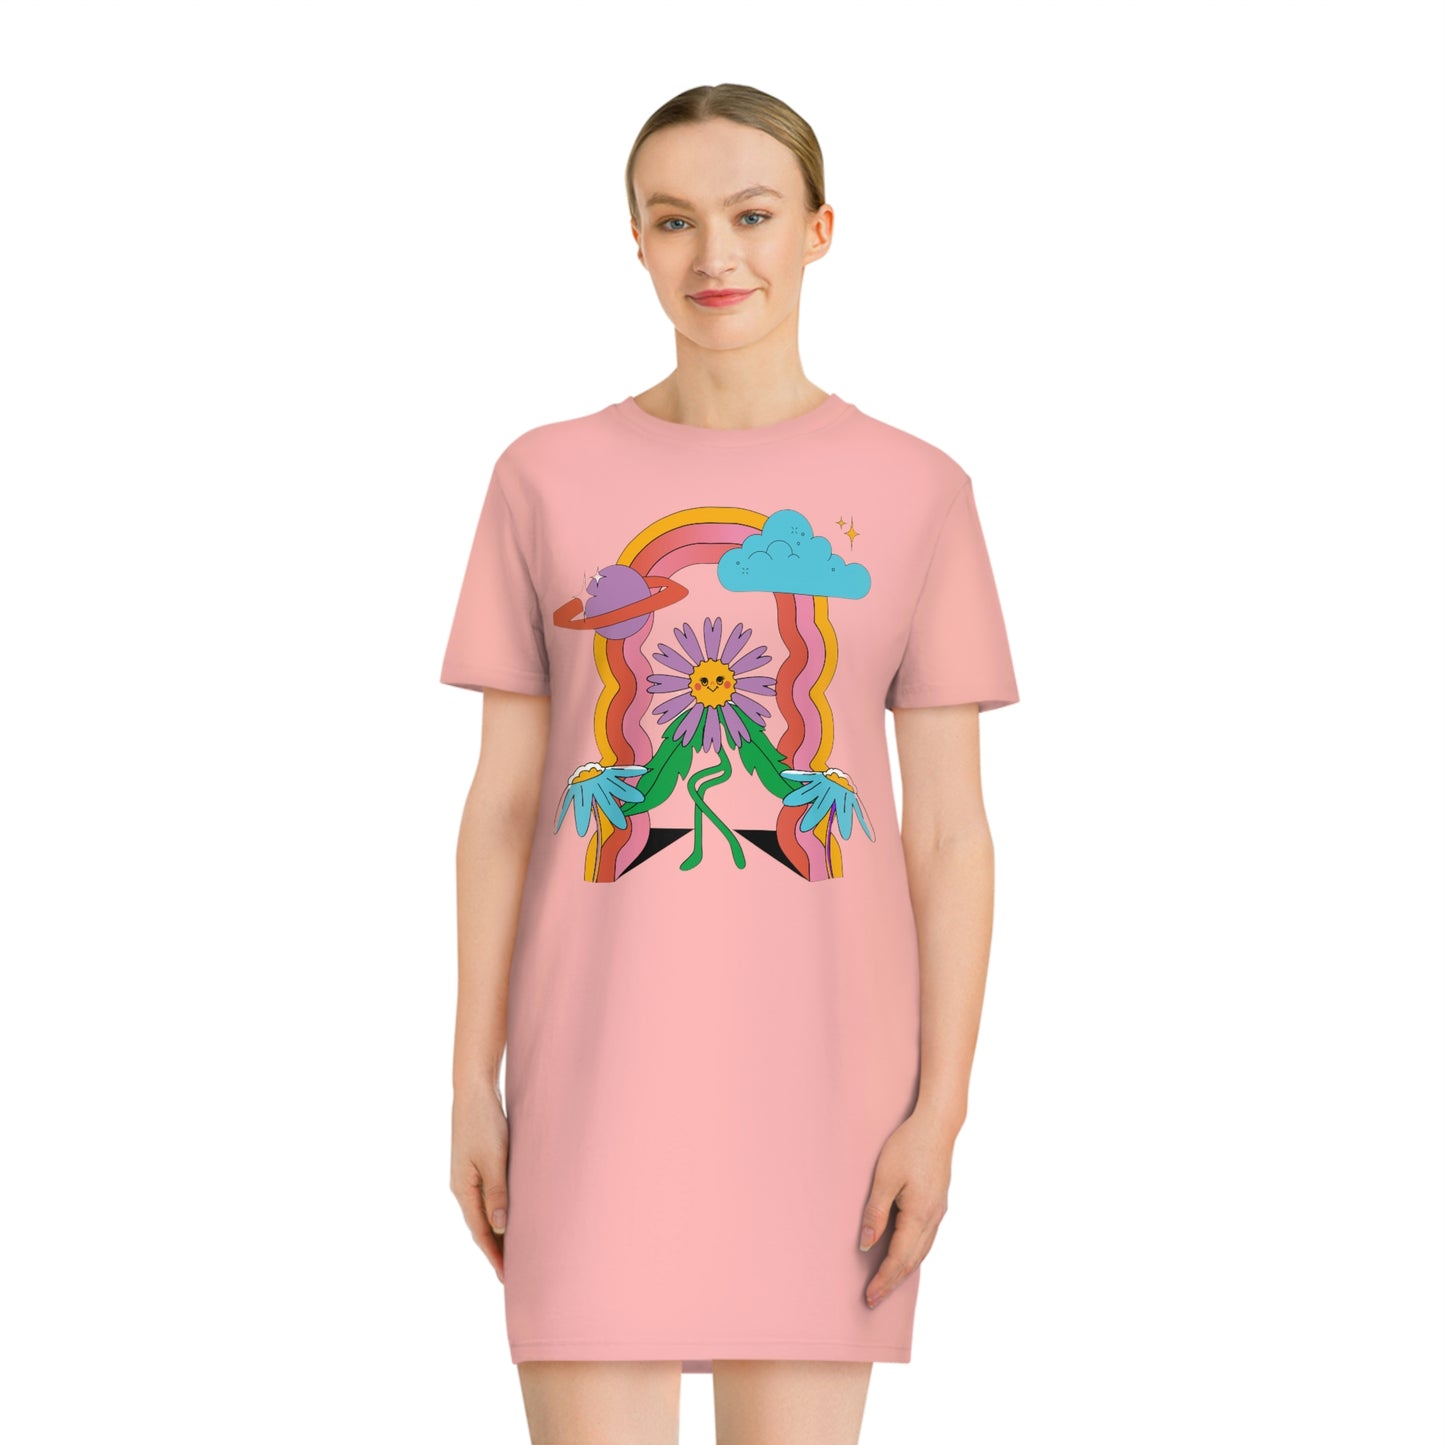 ‘Flower Power’ Printed on Both Sides. Spinner T-Shirt Dress